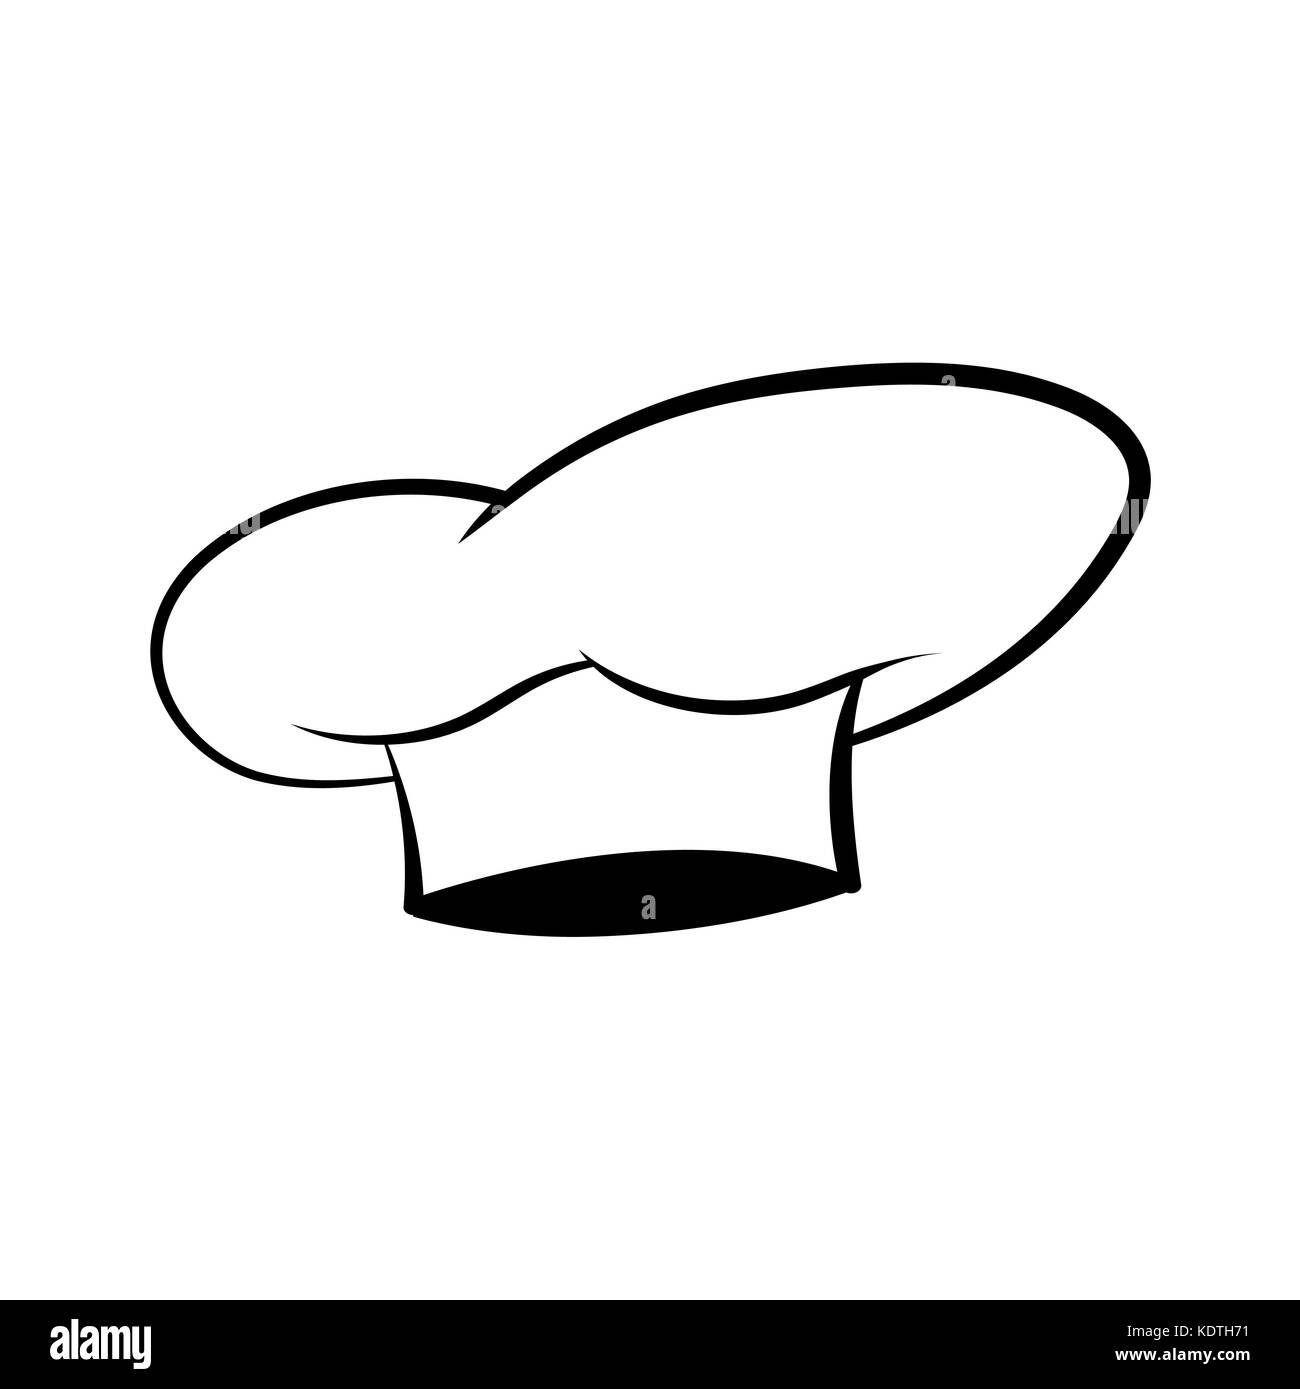 hat chef icon on white background Stock Photo - Alamy